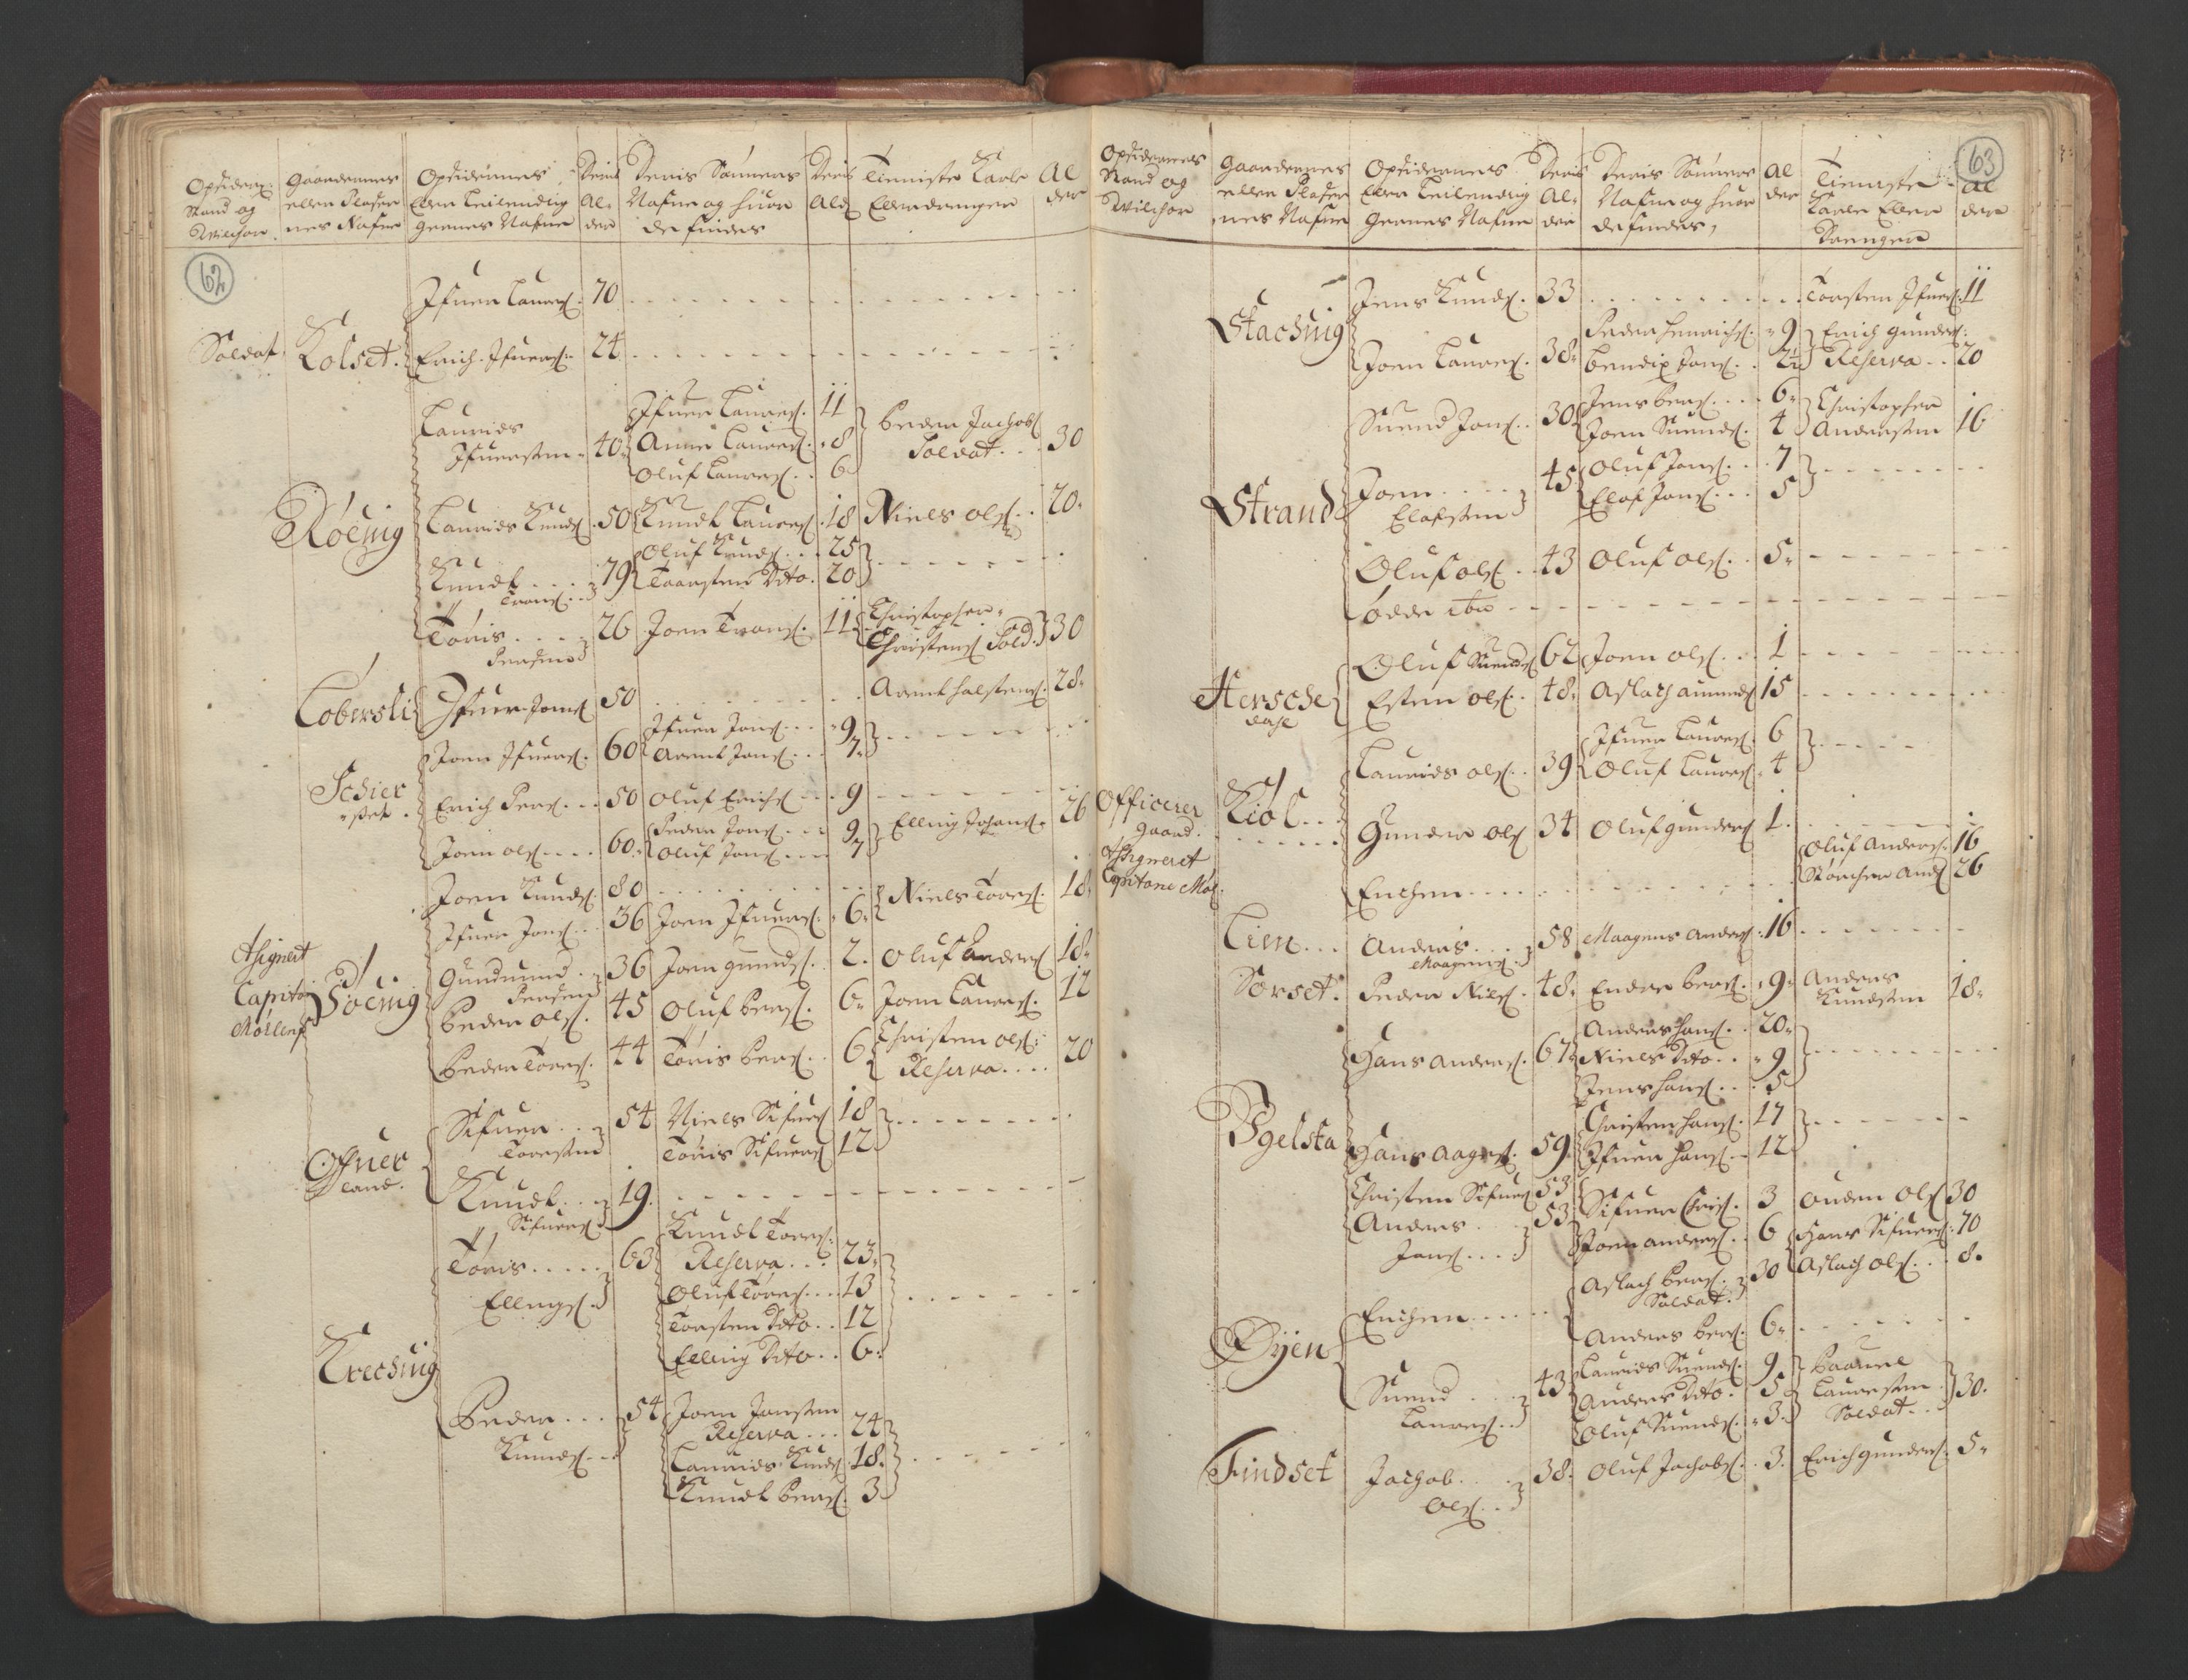 RA, Manntallet 1701, nr. 11: Nordmøre fogderi og Romsdal fogderi, 1701, s. 62-63